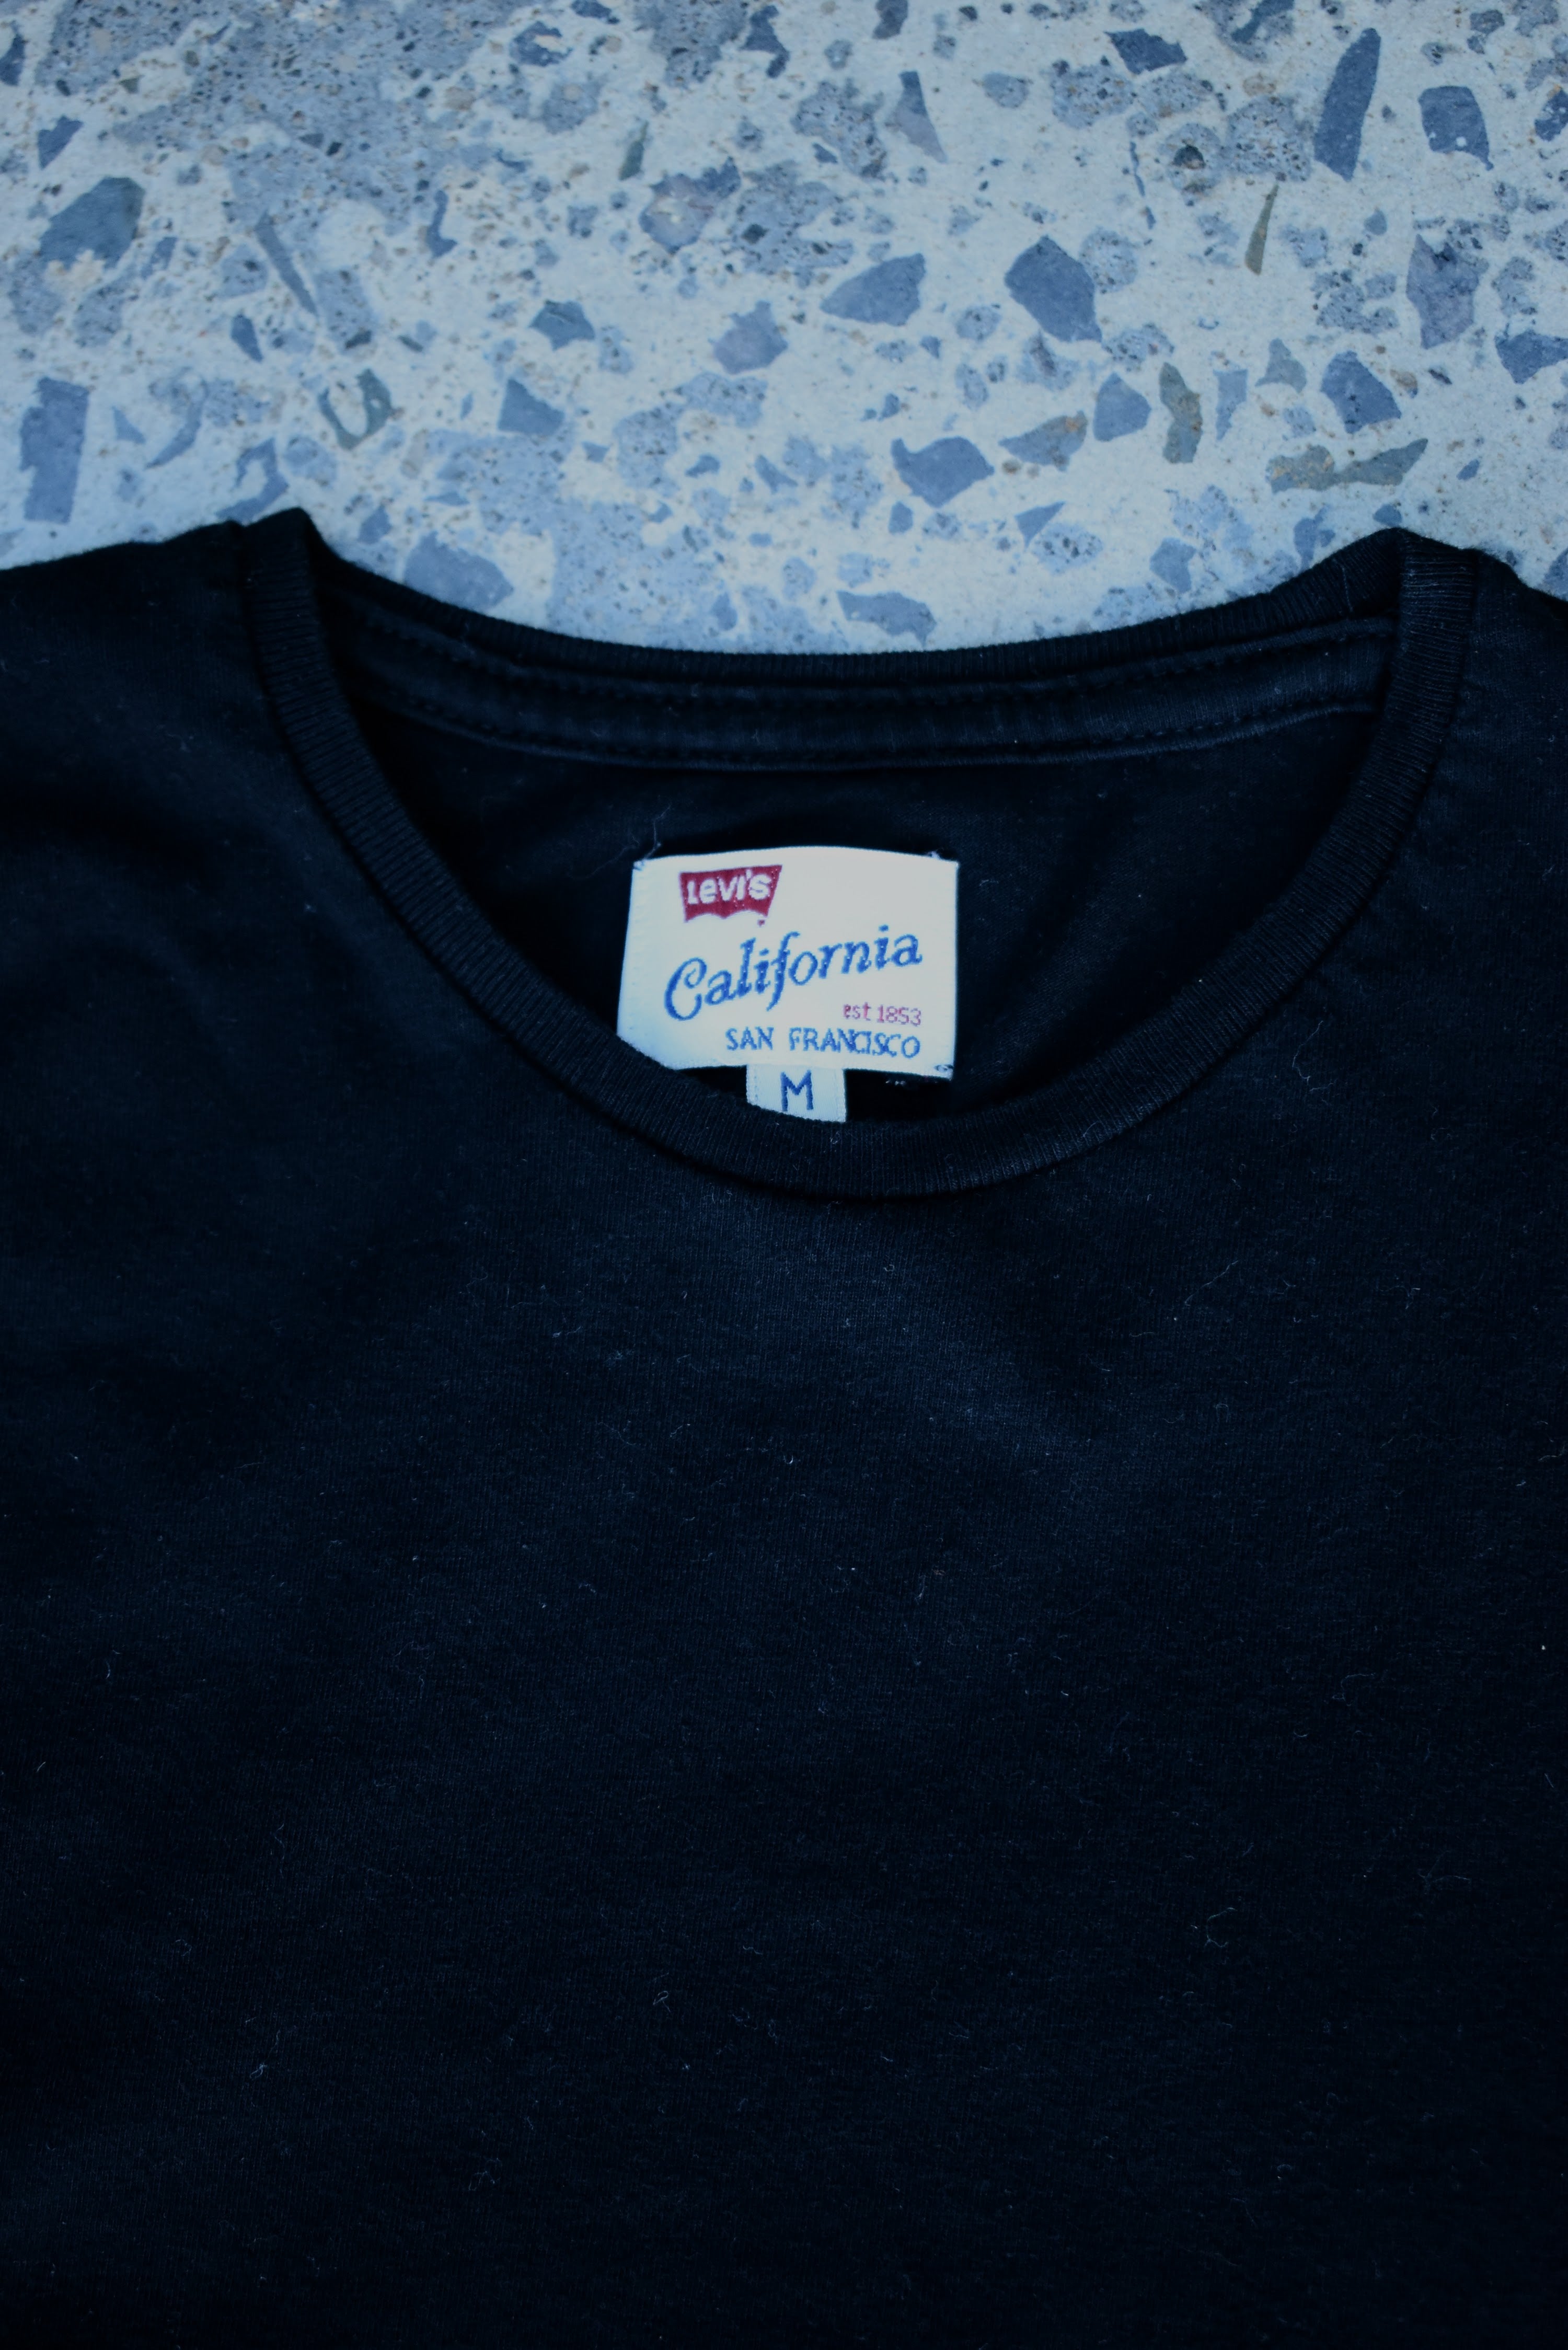 Vintage Levi California Cotton T-Shirt Small